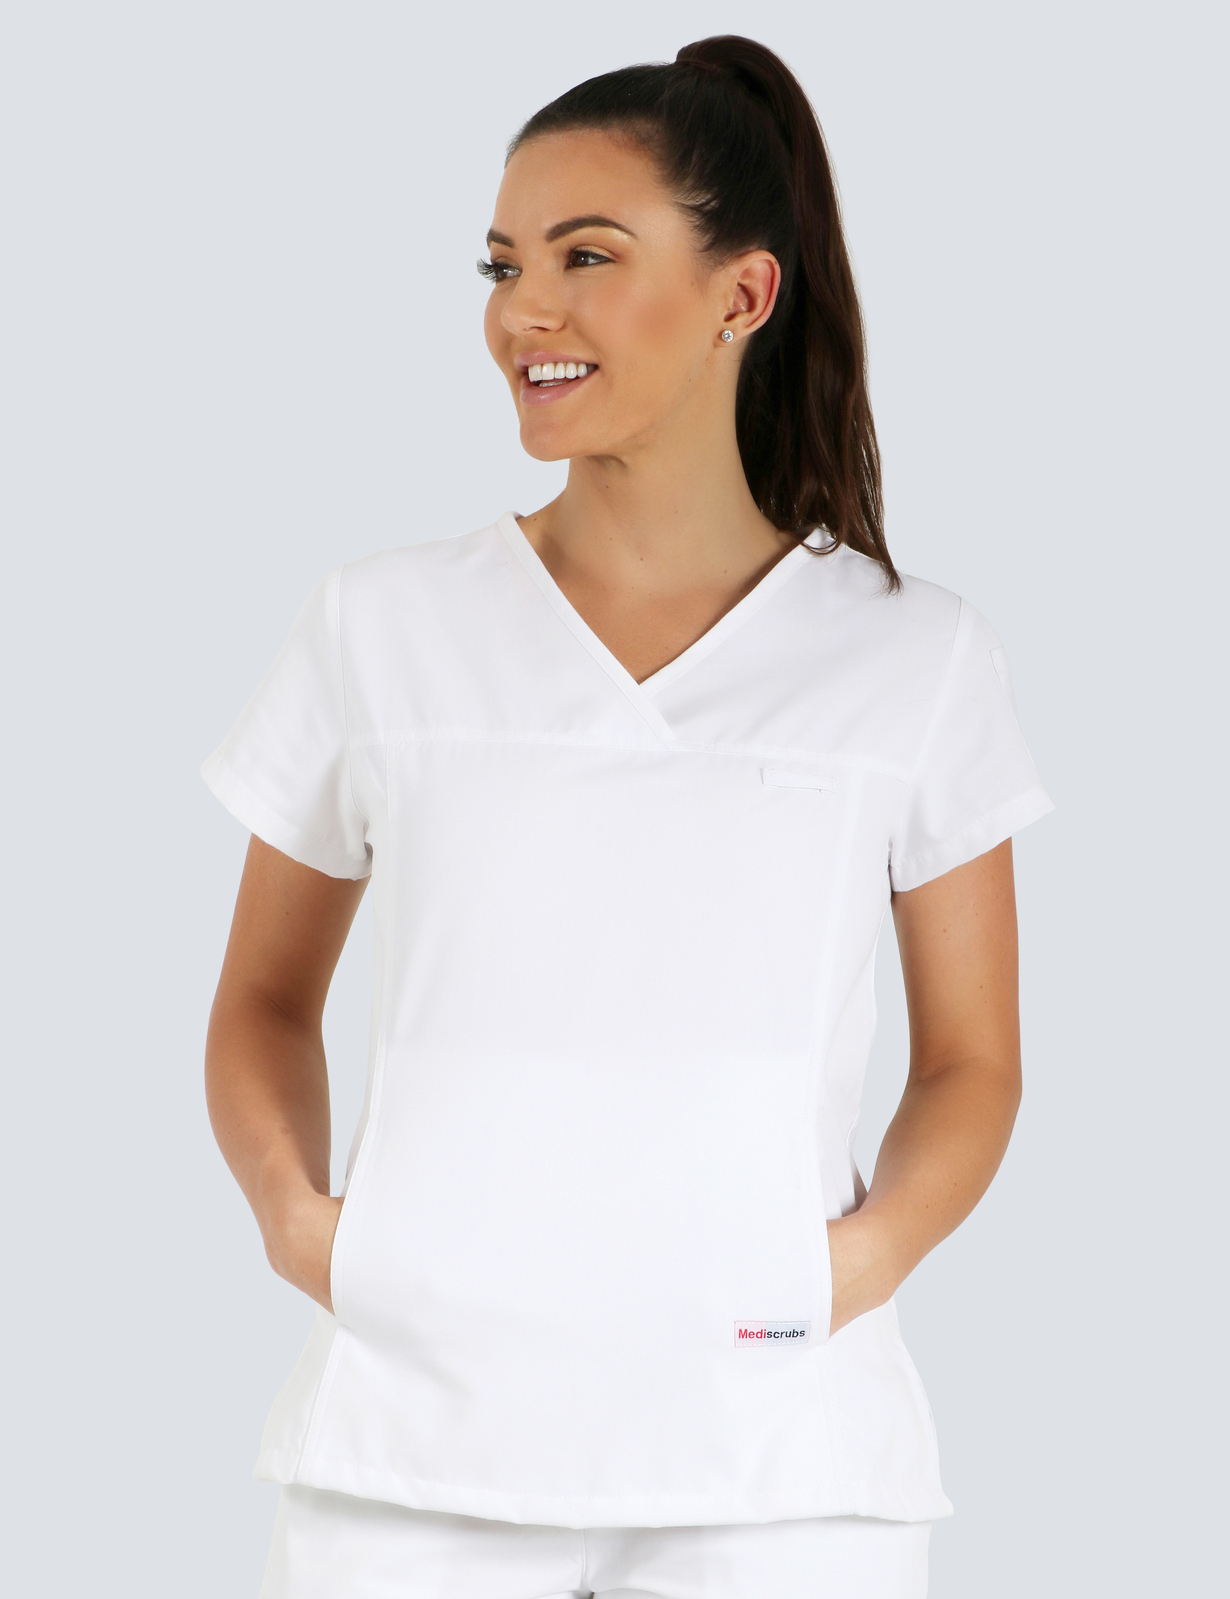 Queensland Children's Hospital Emergency Department Clinical Facilitator Uniform Top Bundle  (Women's Fit Top in White incl Logos)